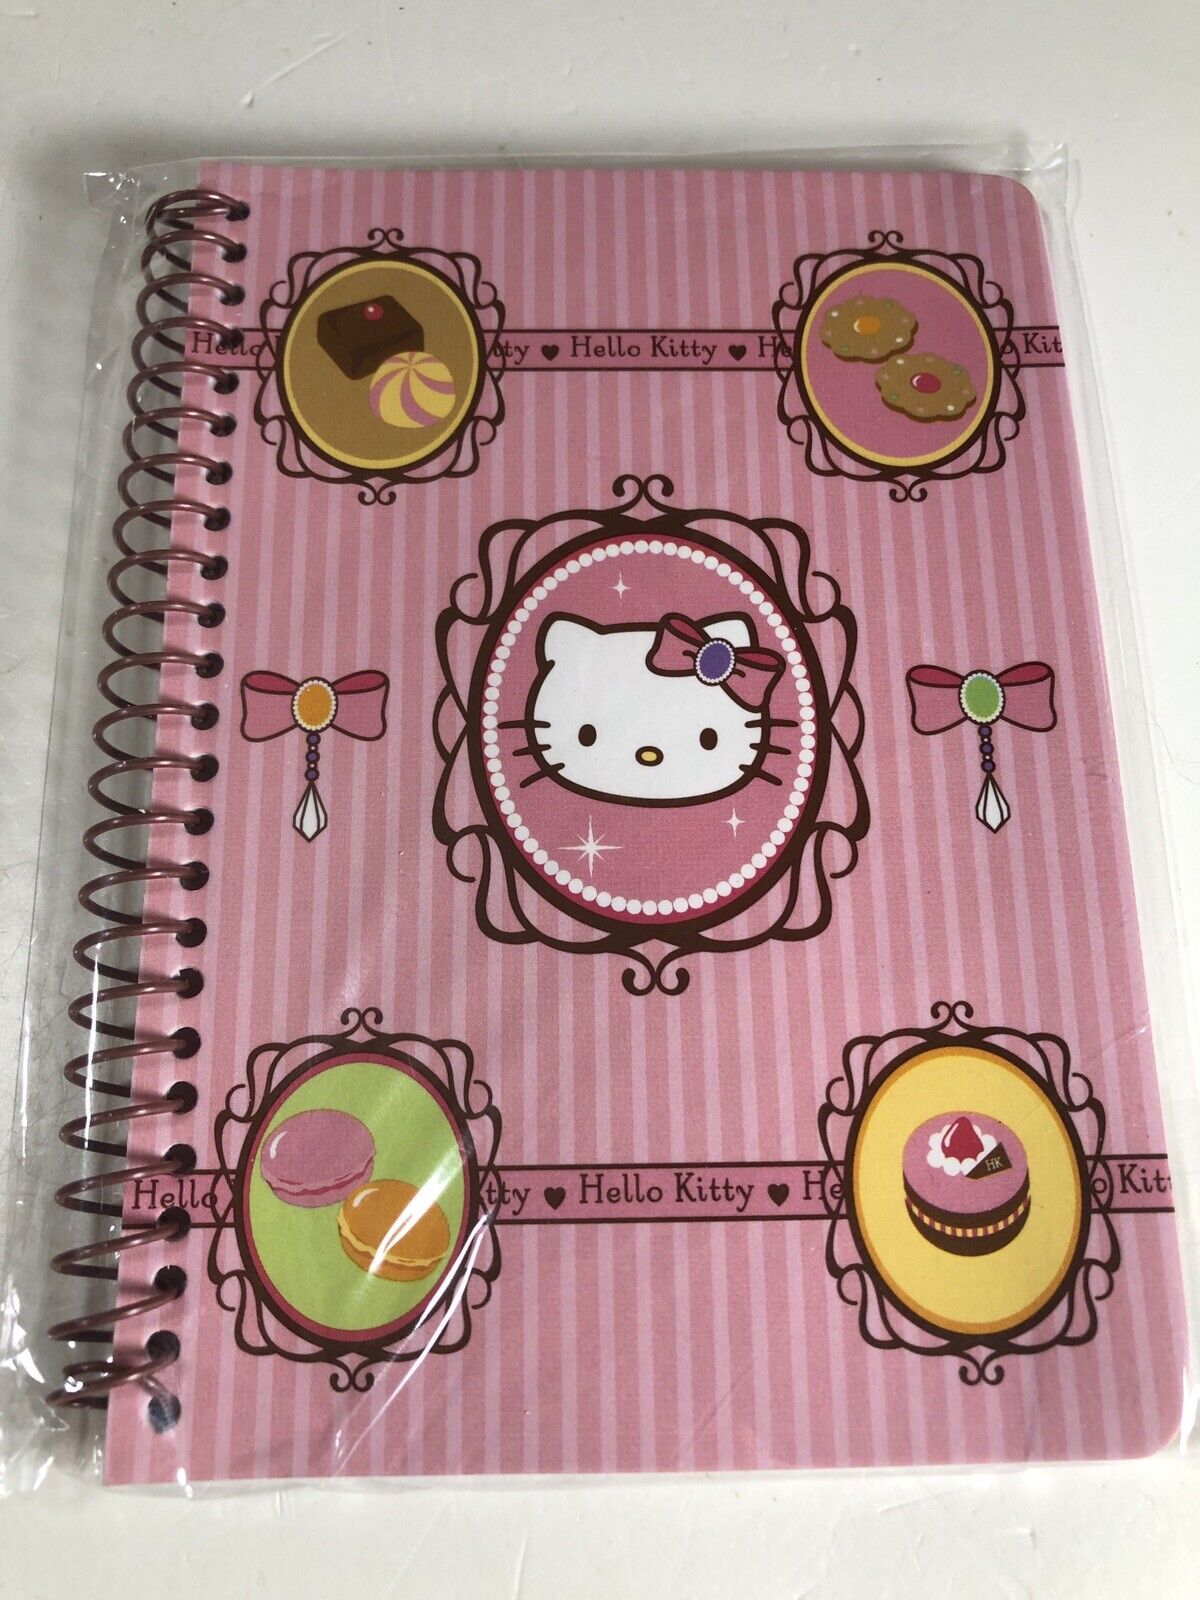 Sanrio Hello Kitty Sweet French Treats Mini Spiral Notebook 2008 35 Sheets NEW